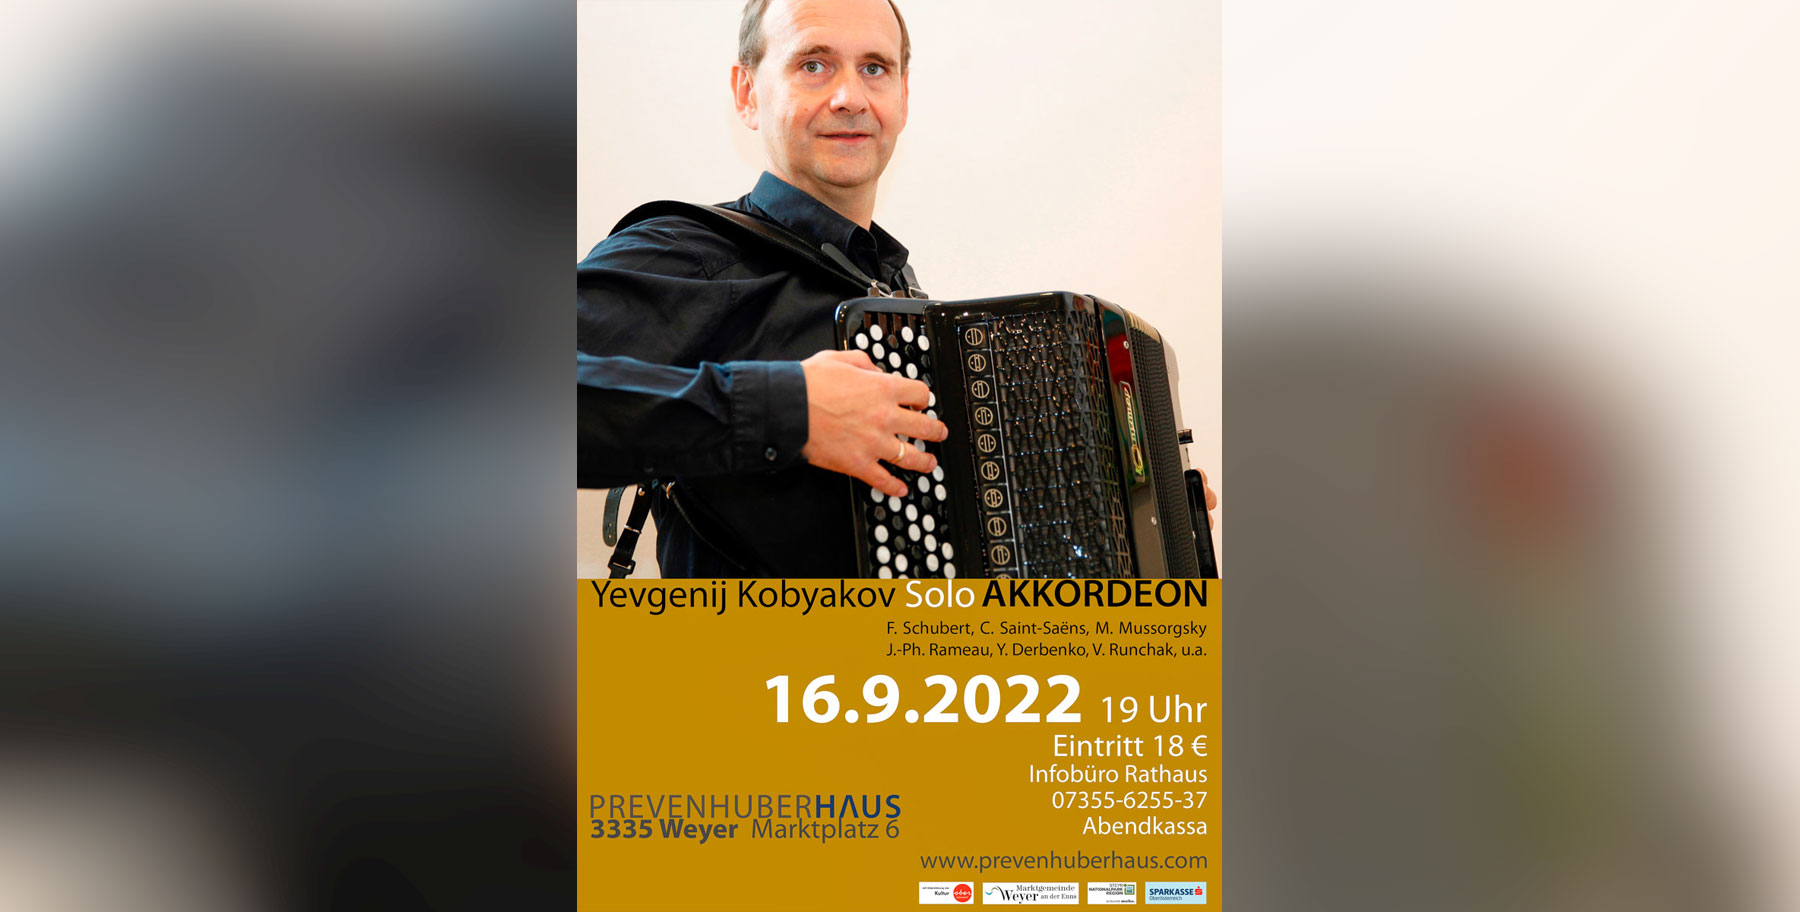 Musik | Yevgenij Kobyakov Solo, Akkordeon